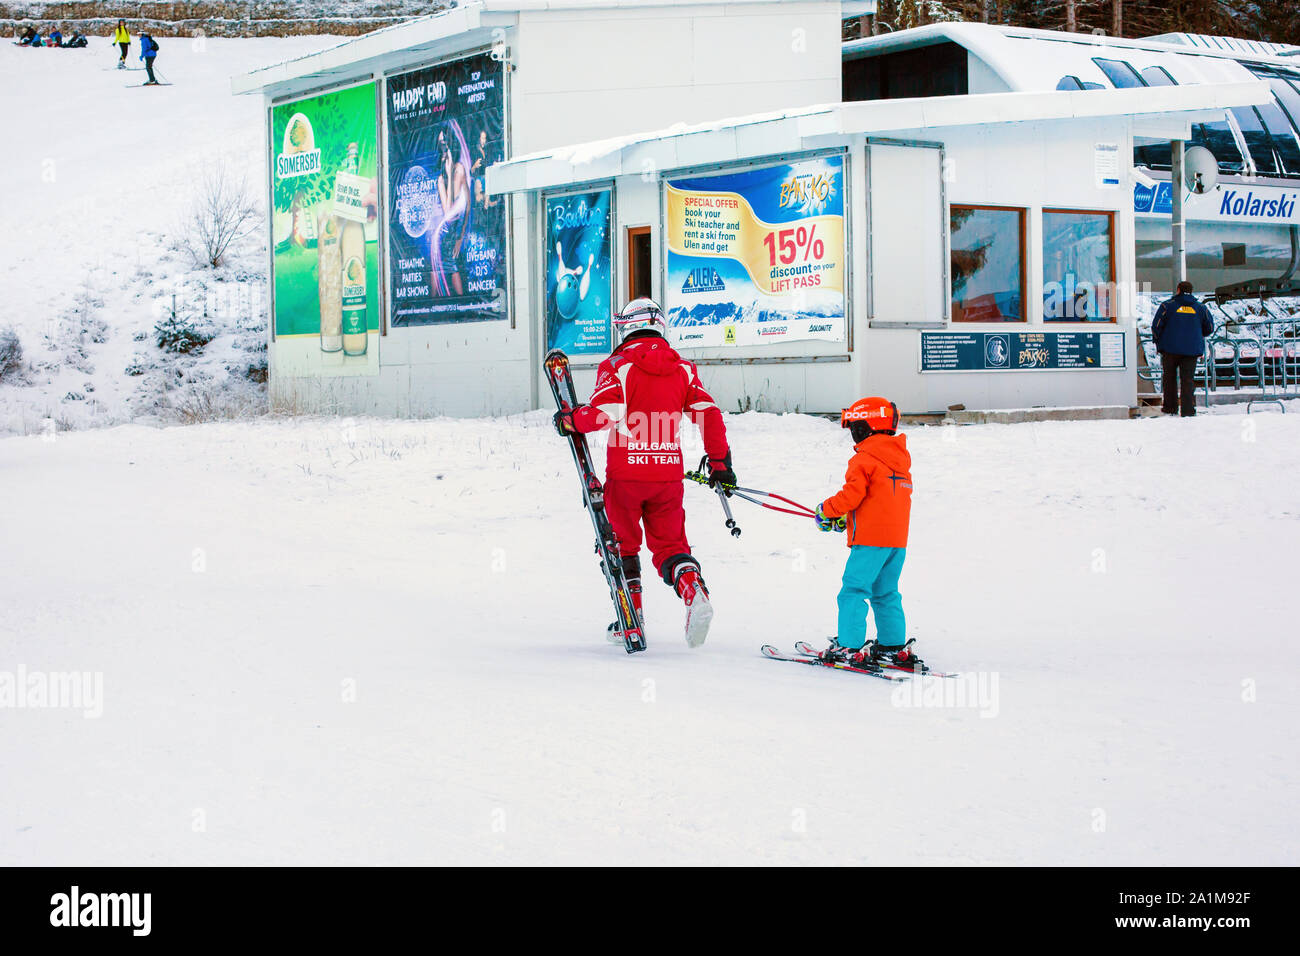 Bansko, Bulgaria - December, 12, 2015: The small child learning to ski and ski instructor on the slope in Bansko, Bulgaria Stock Photo